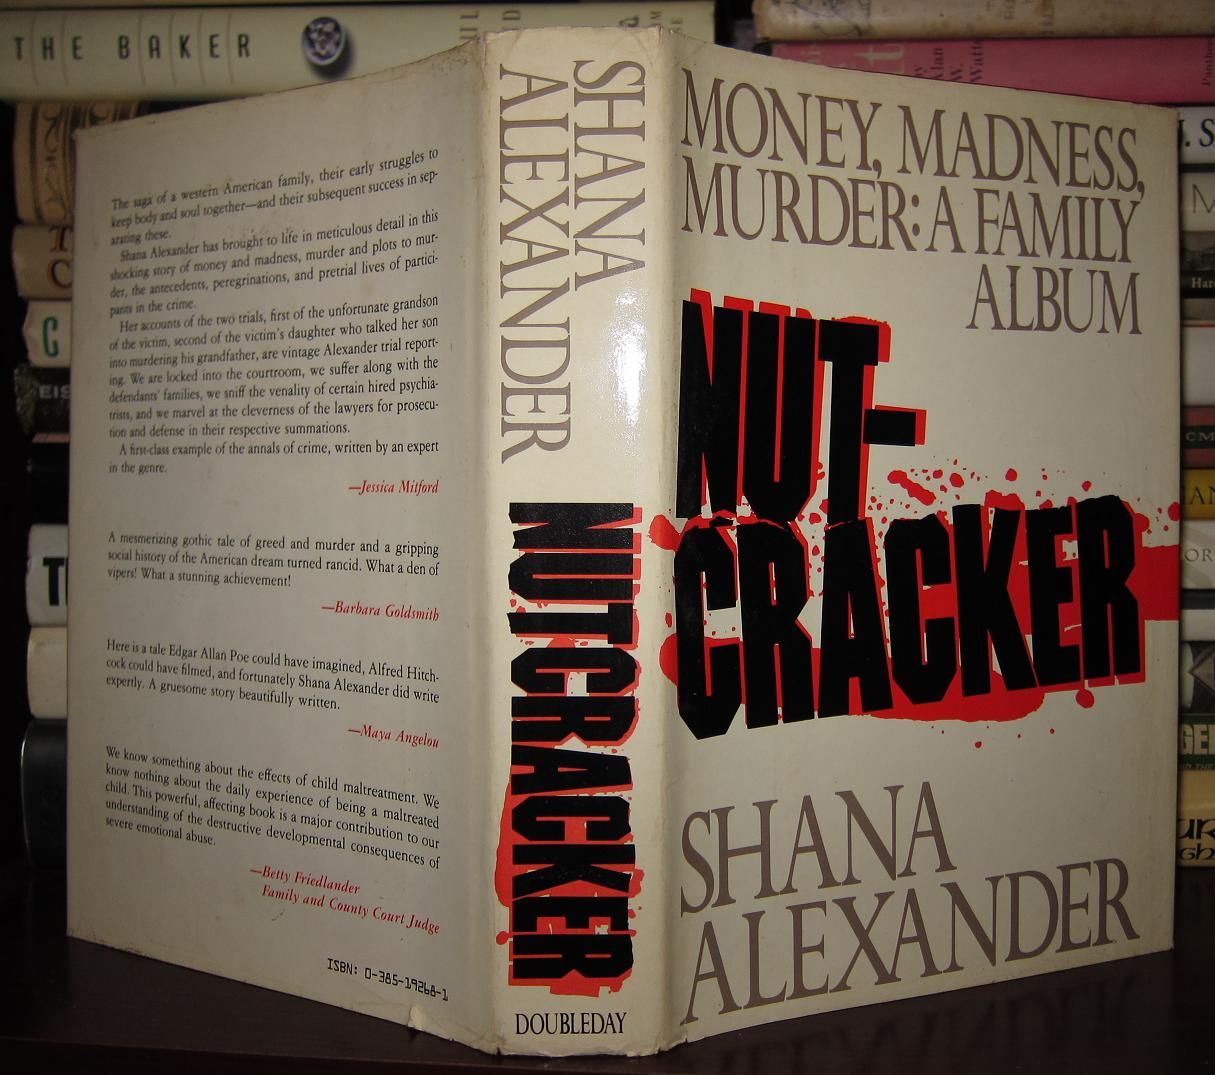 ALEXANDER, SHANA - Nut-Cracker Money, Madness, Murder; a Family Album Multimillionaire Workaholic Morman, Franklin Bradshaw, Murdered